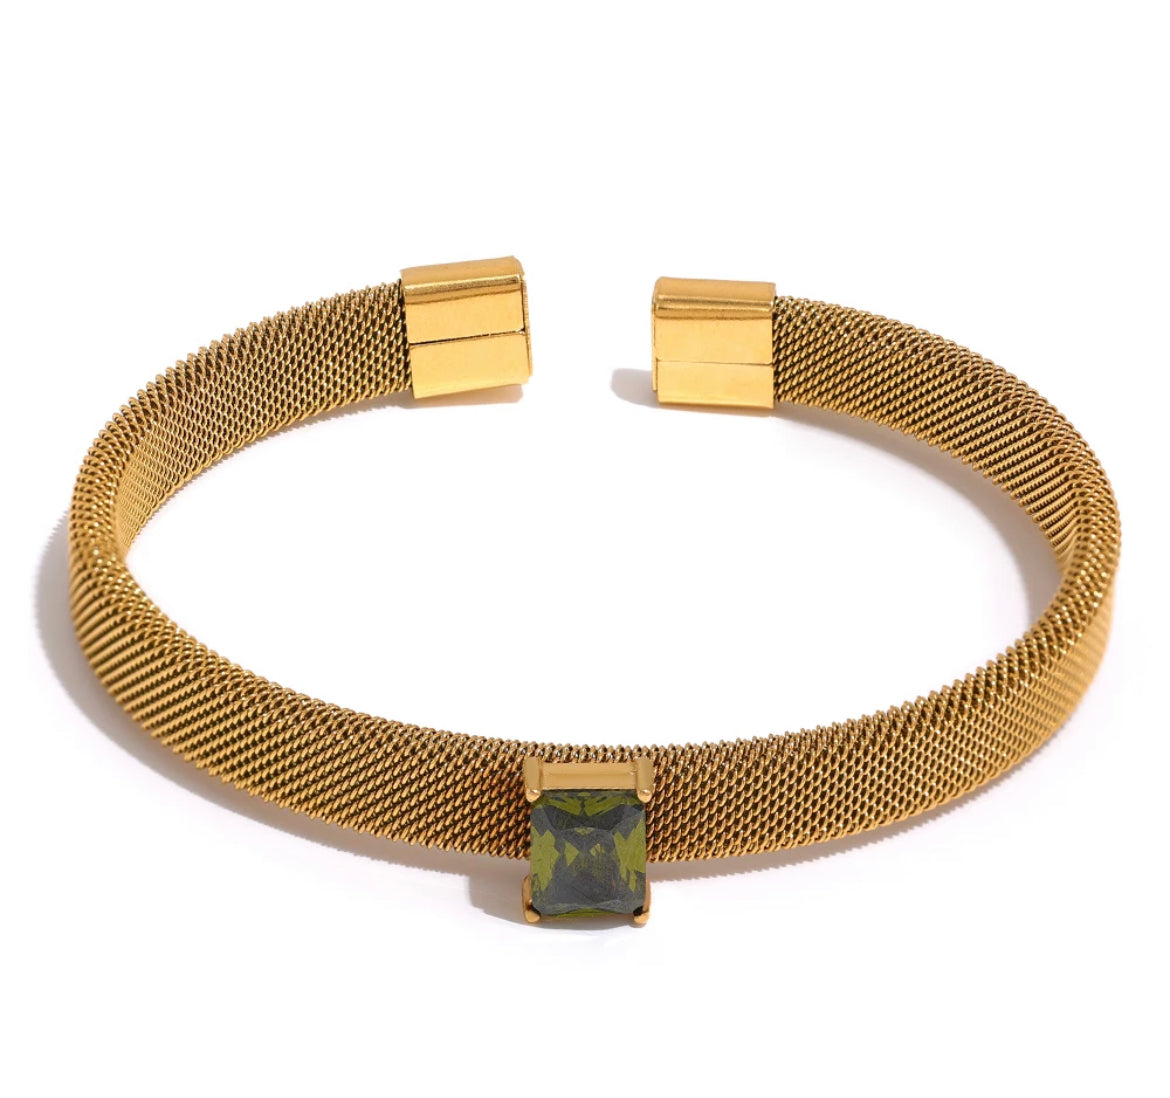 Cuff Bracelets - Green Stone 18K Gold Plated | Boho & Mala